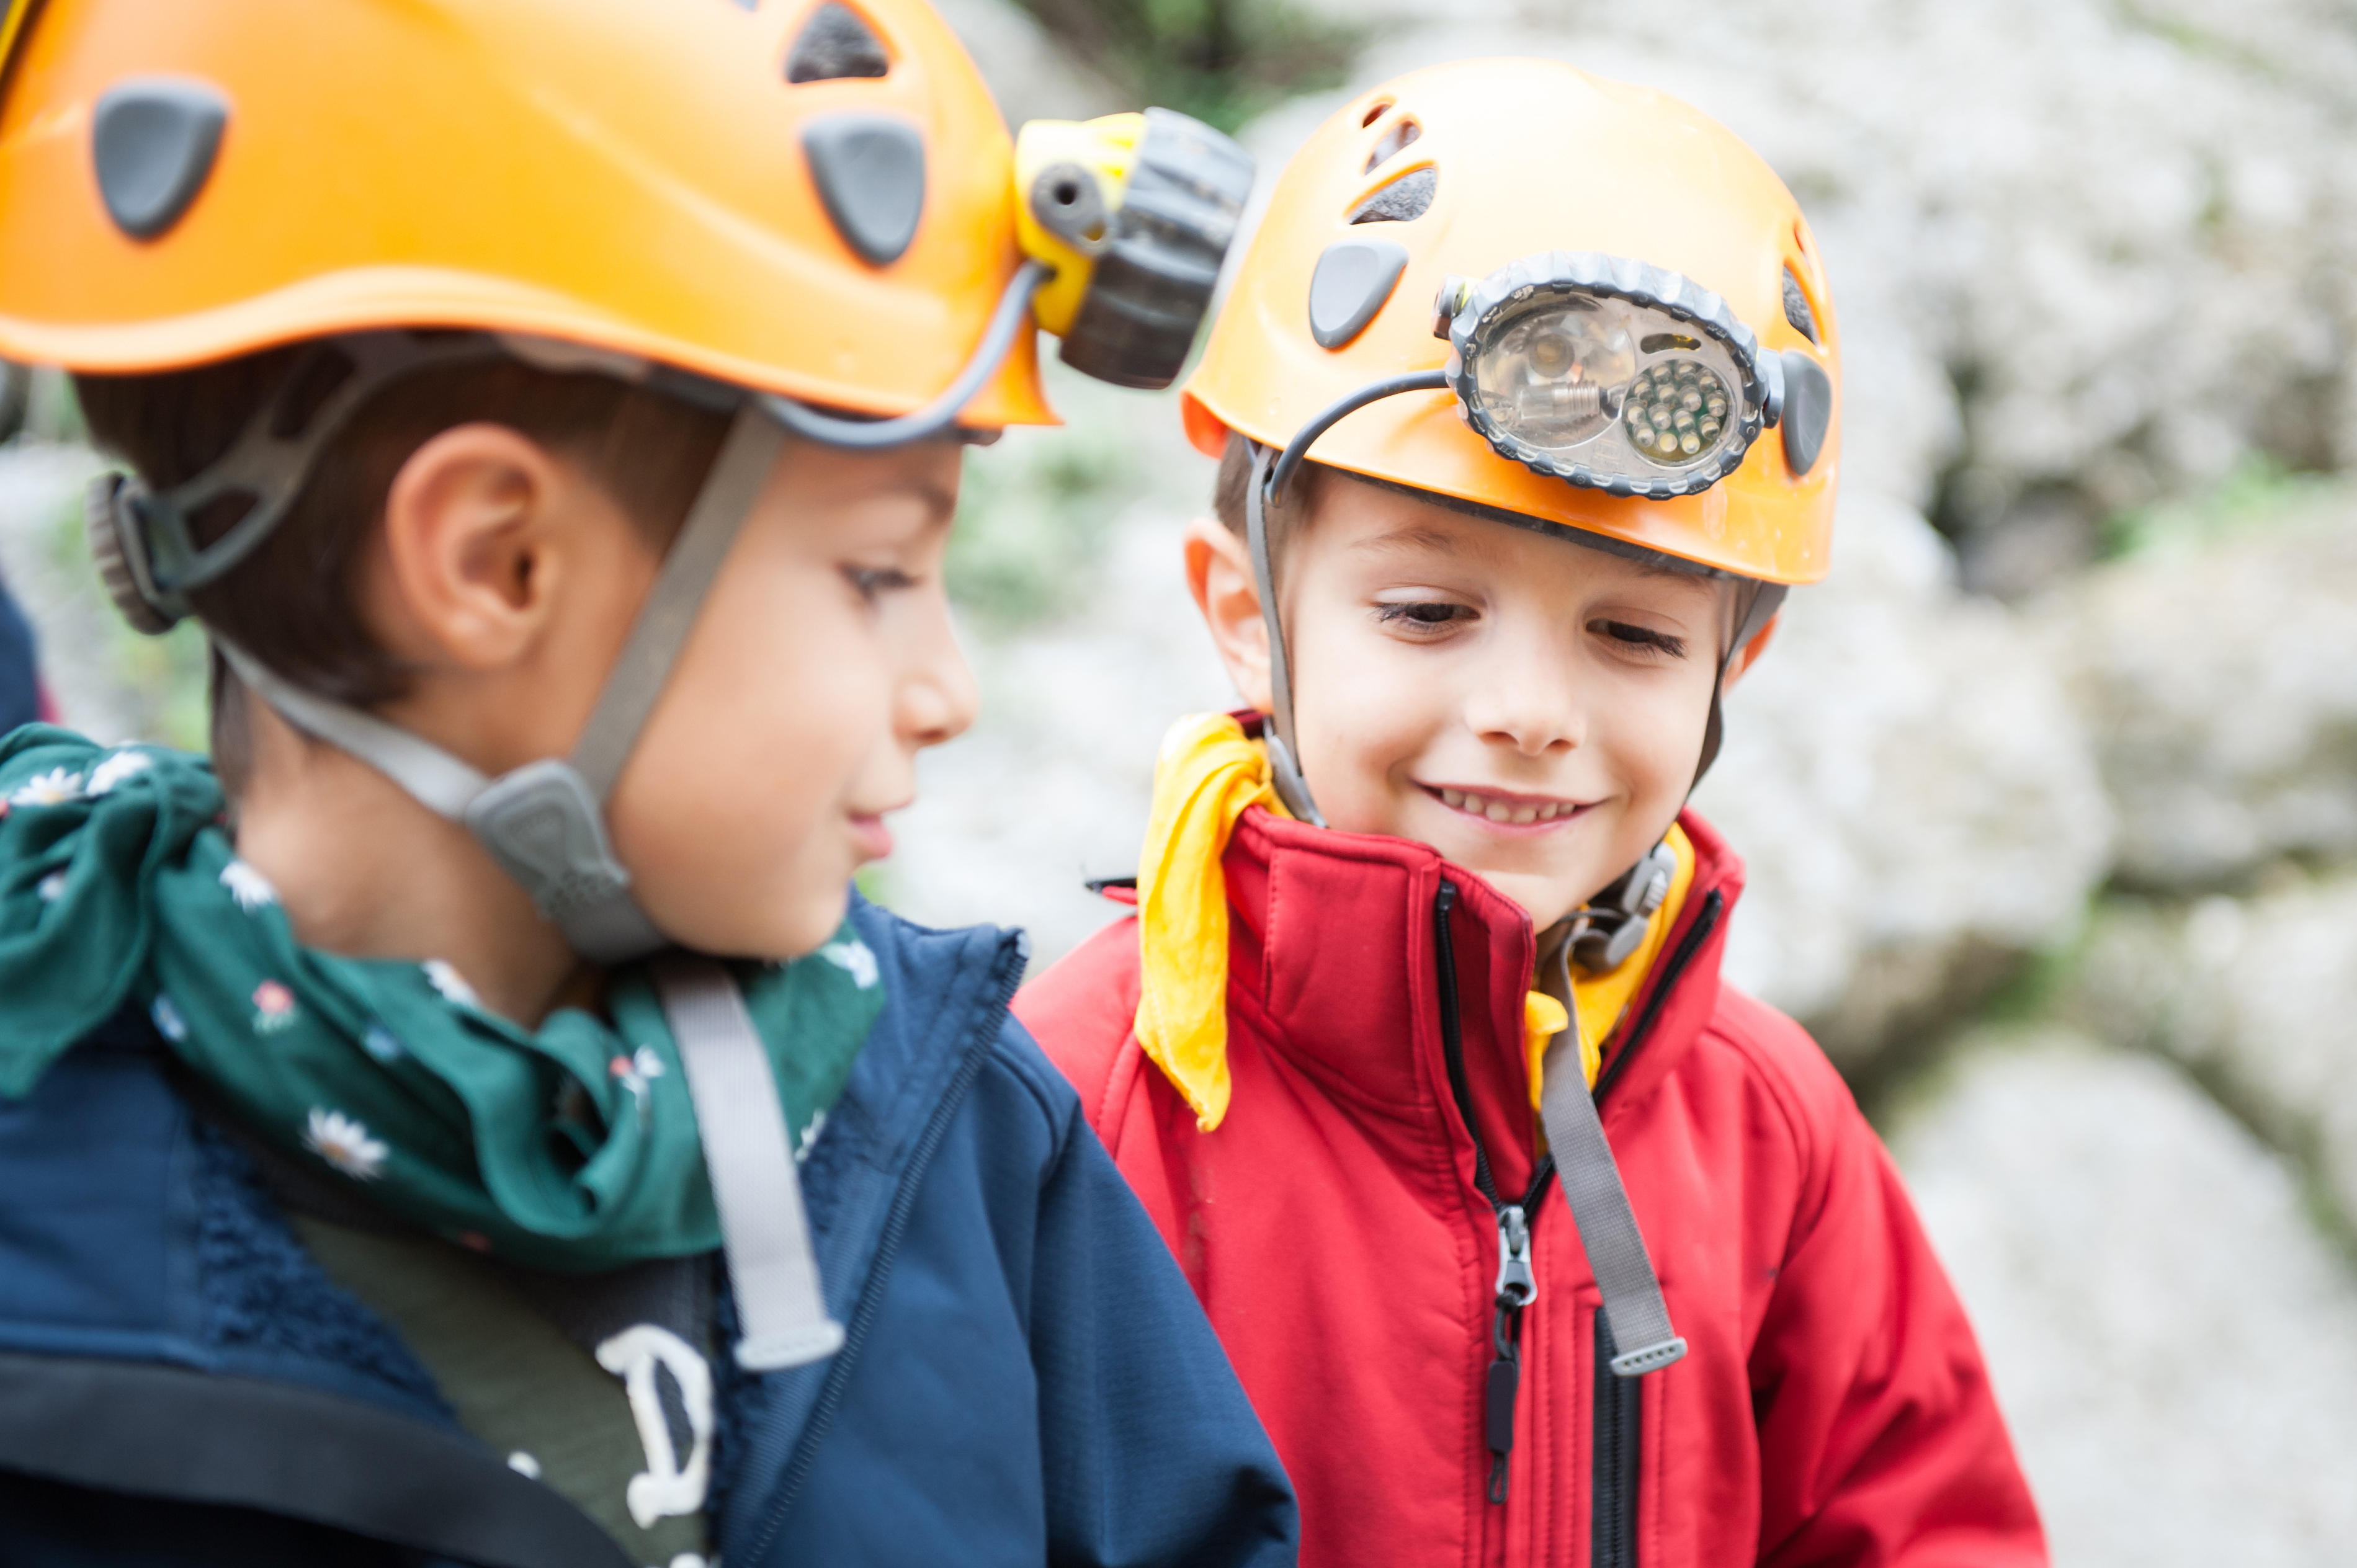 Höhlenerkundung-Kinderwaering-Helm